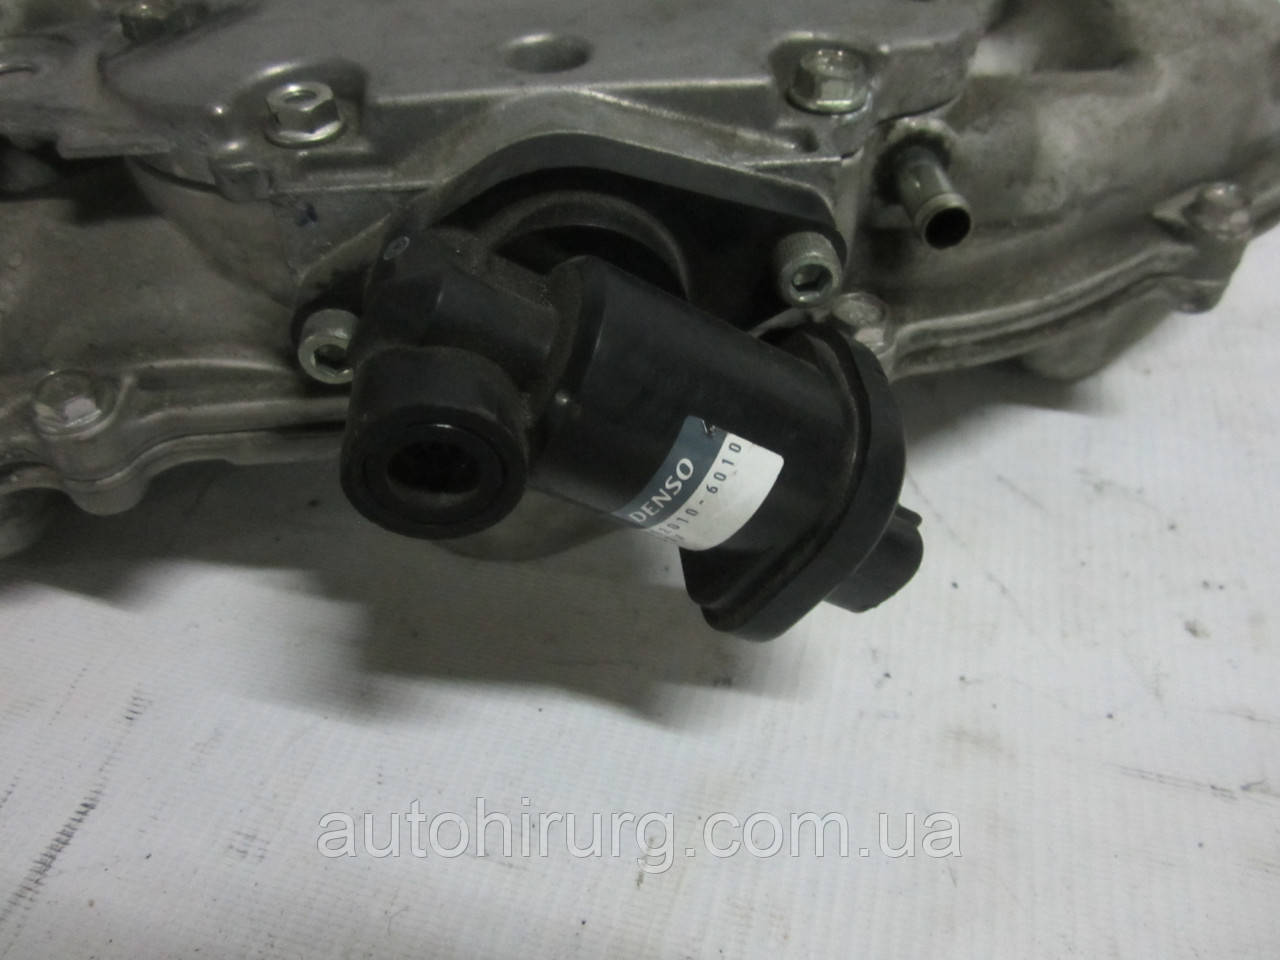 Клапан керування холостим ходом Acura MDX (012010-6010)